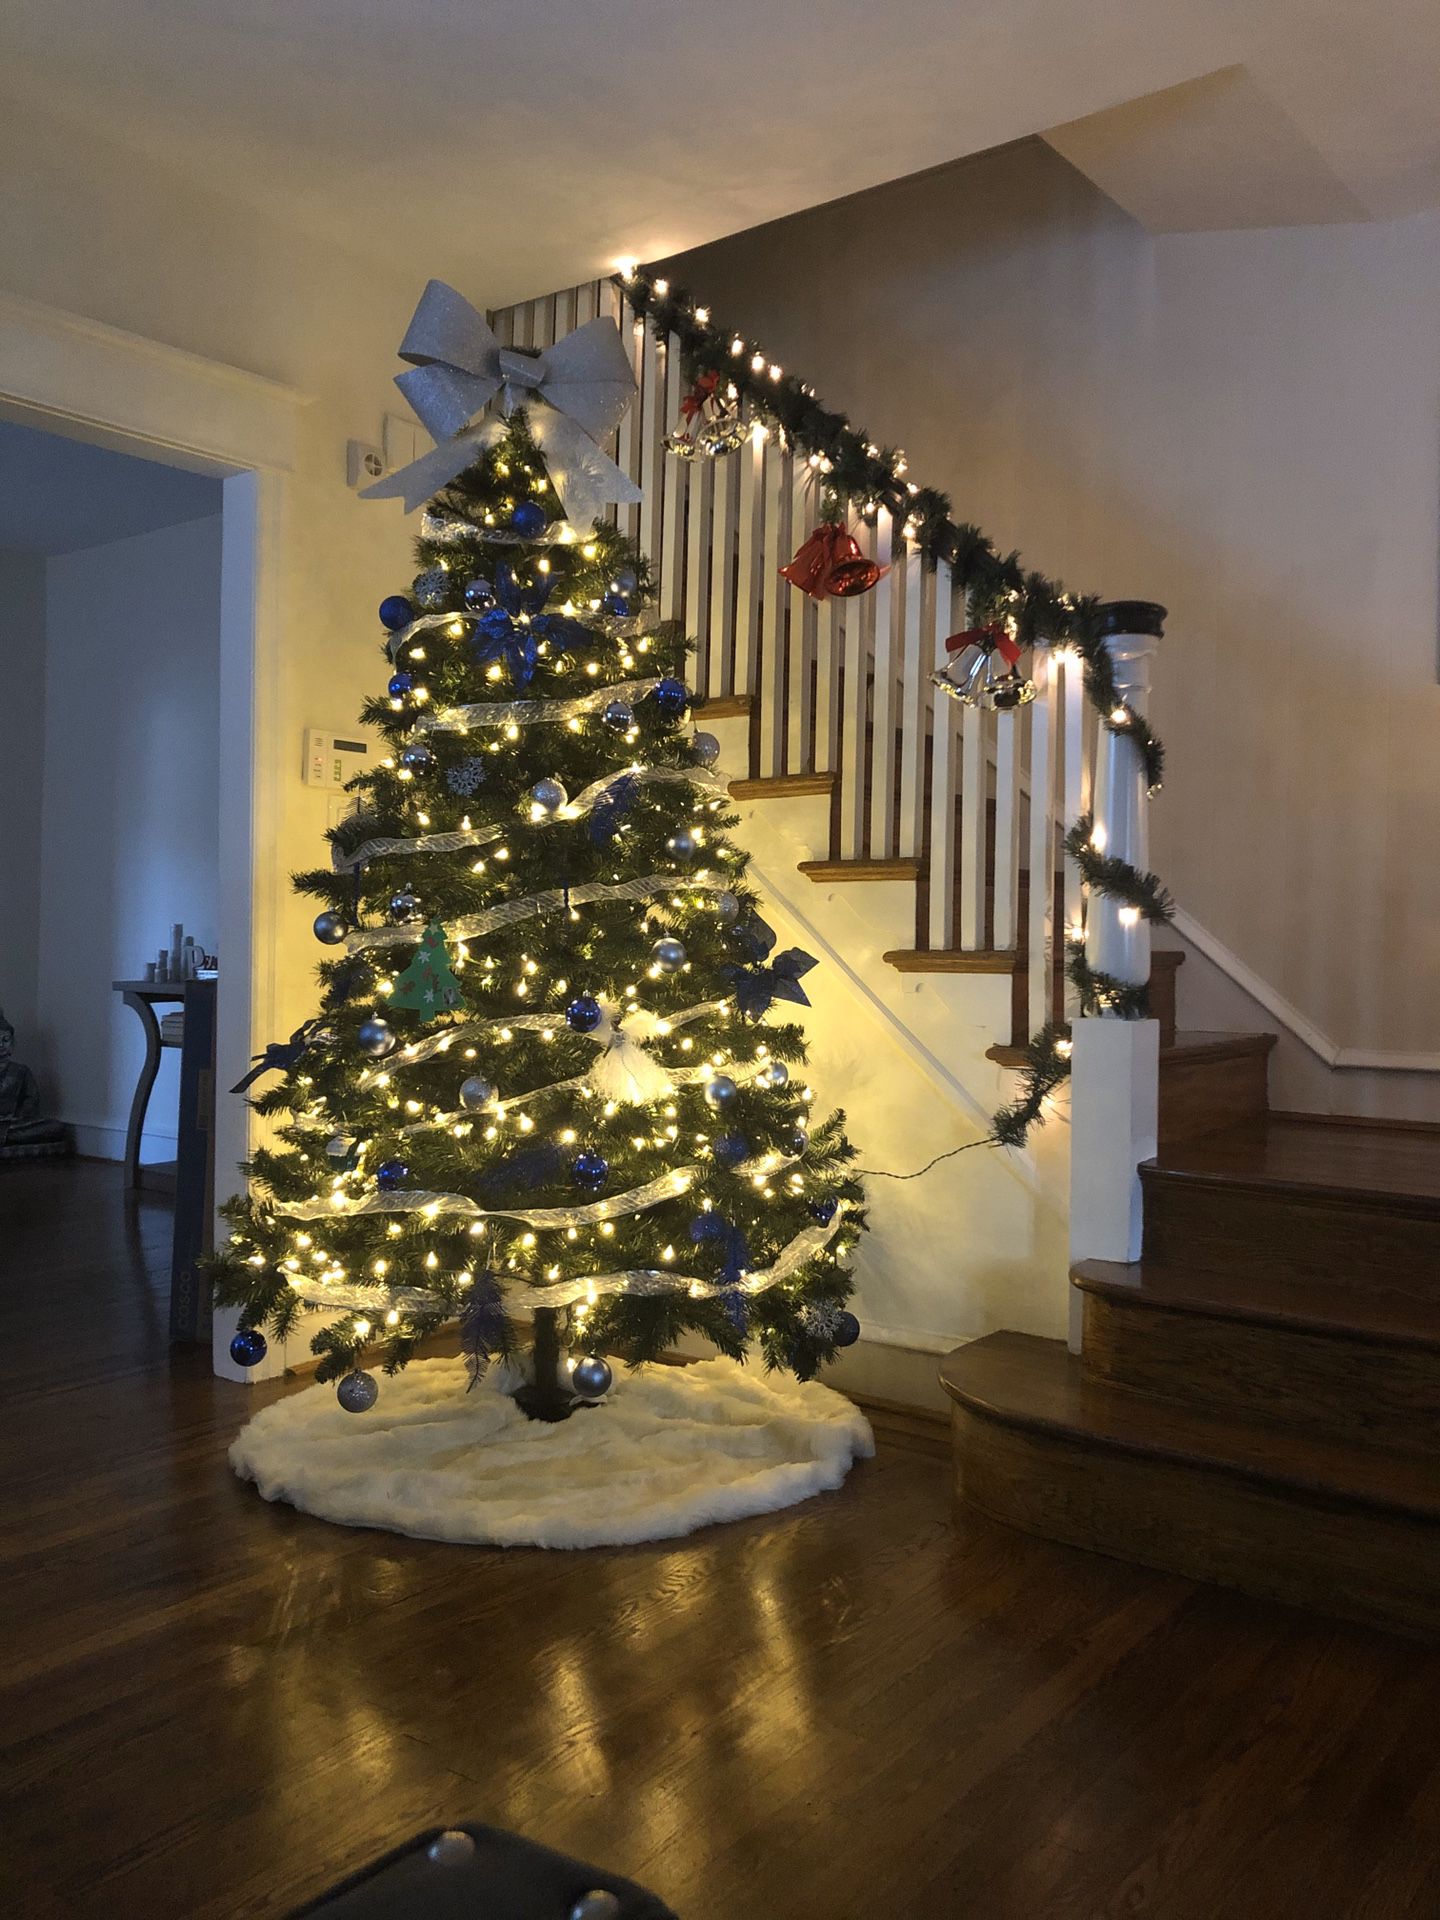 Christmas tree & decorations